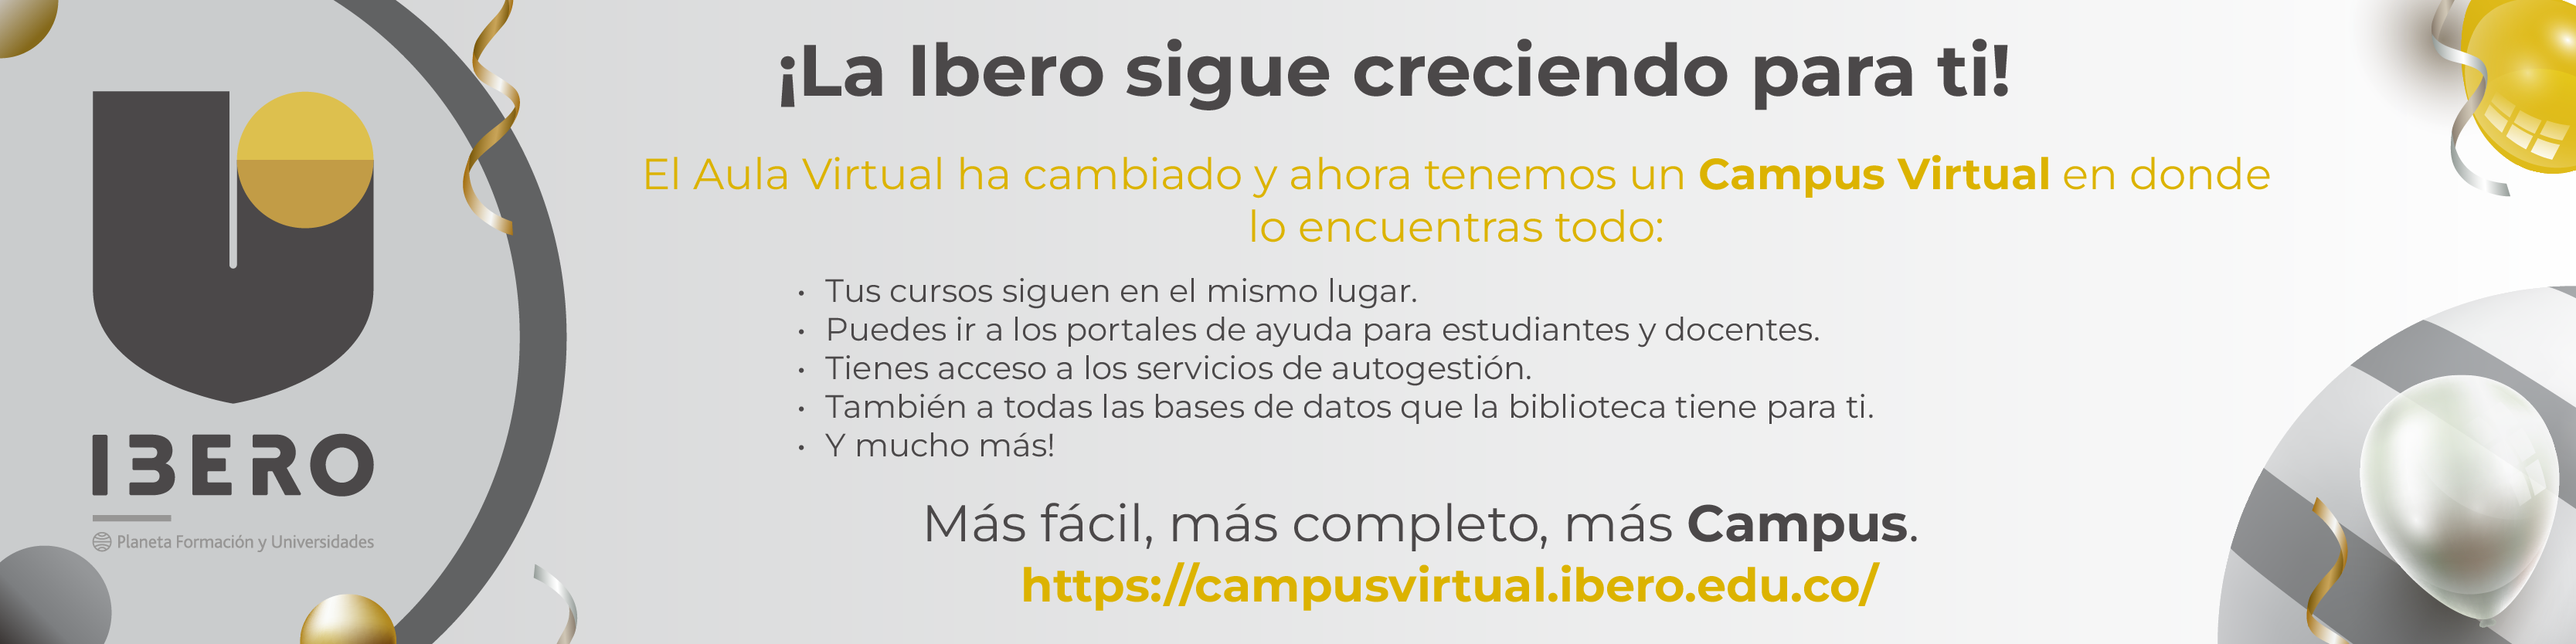 Nuevo CampusVirtual Ibero